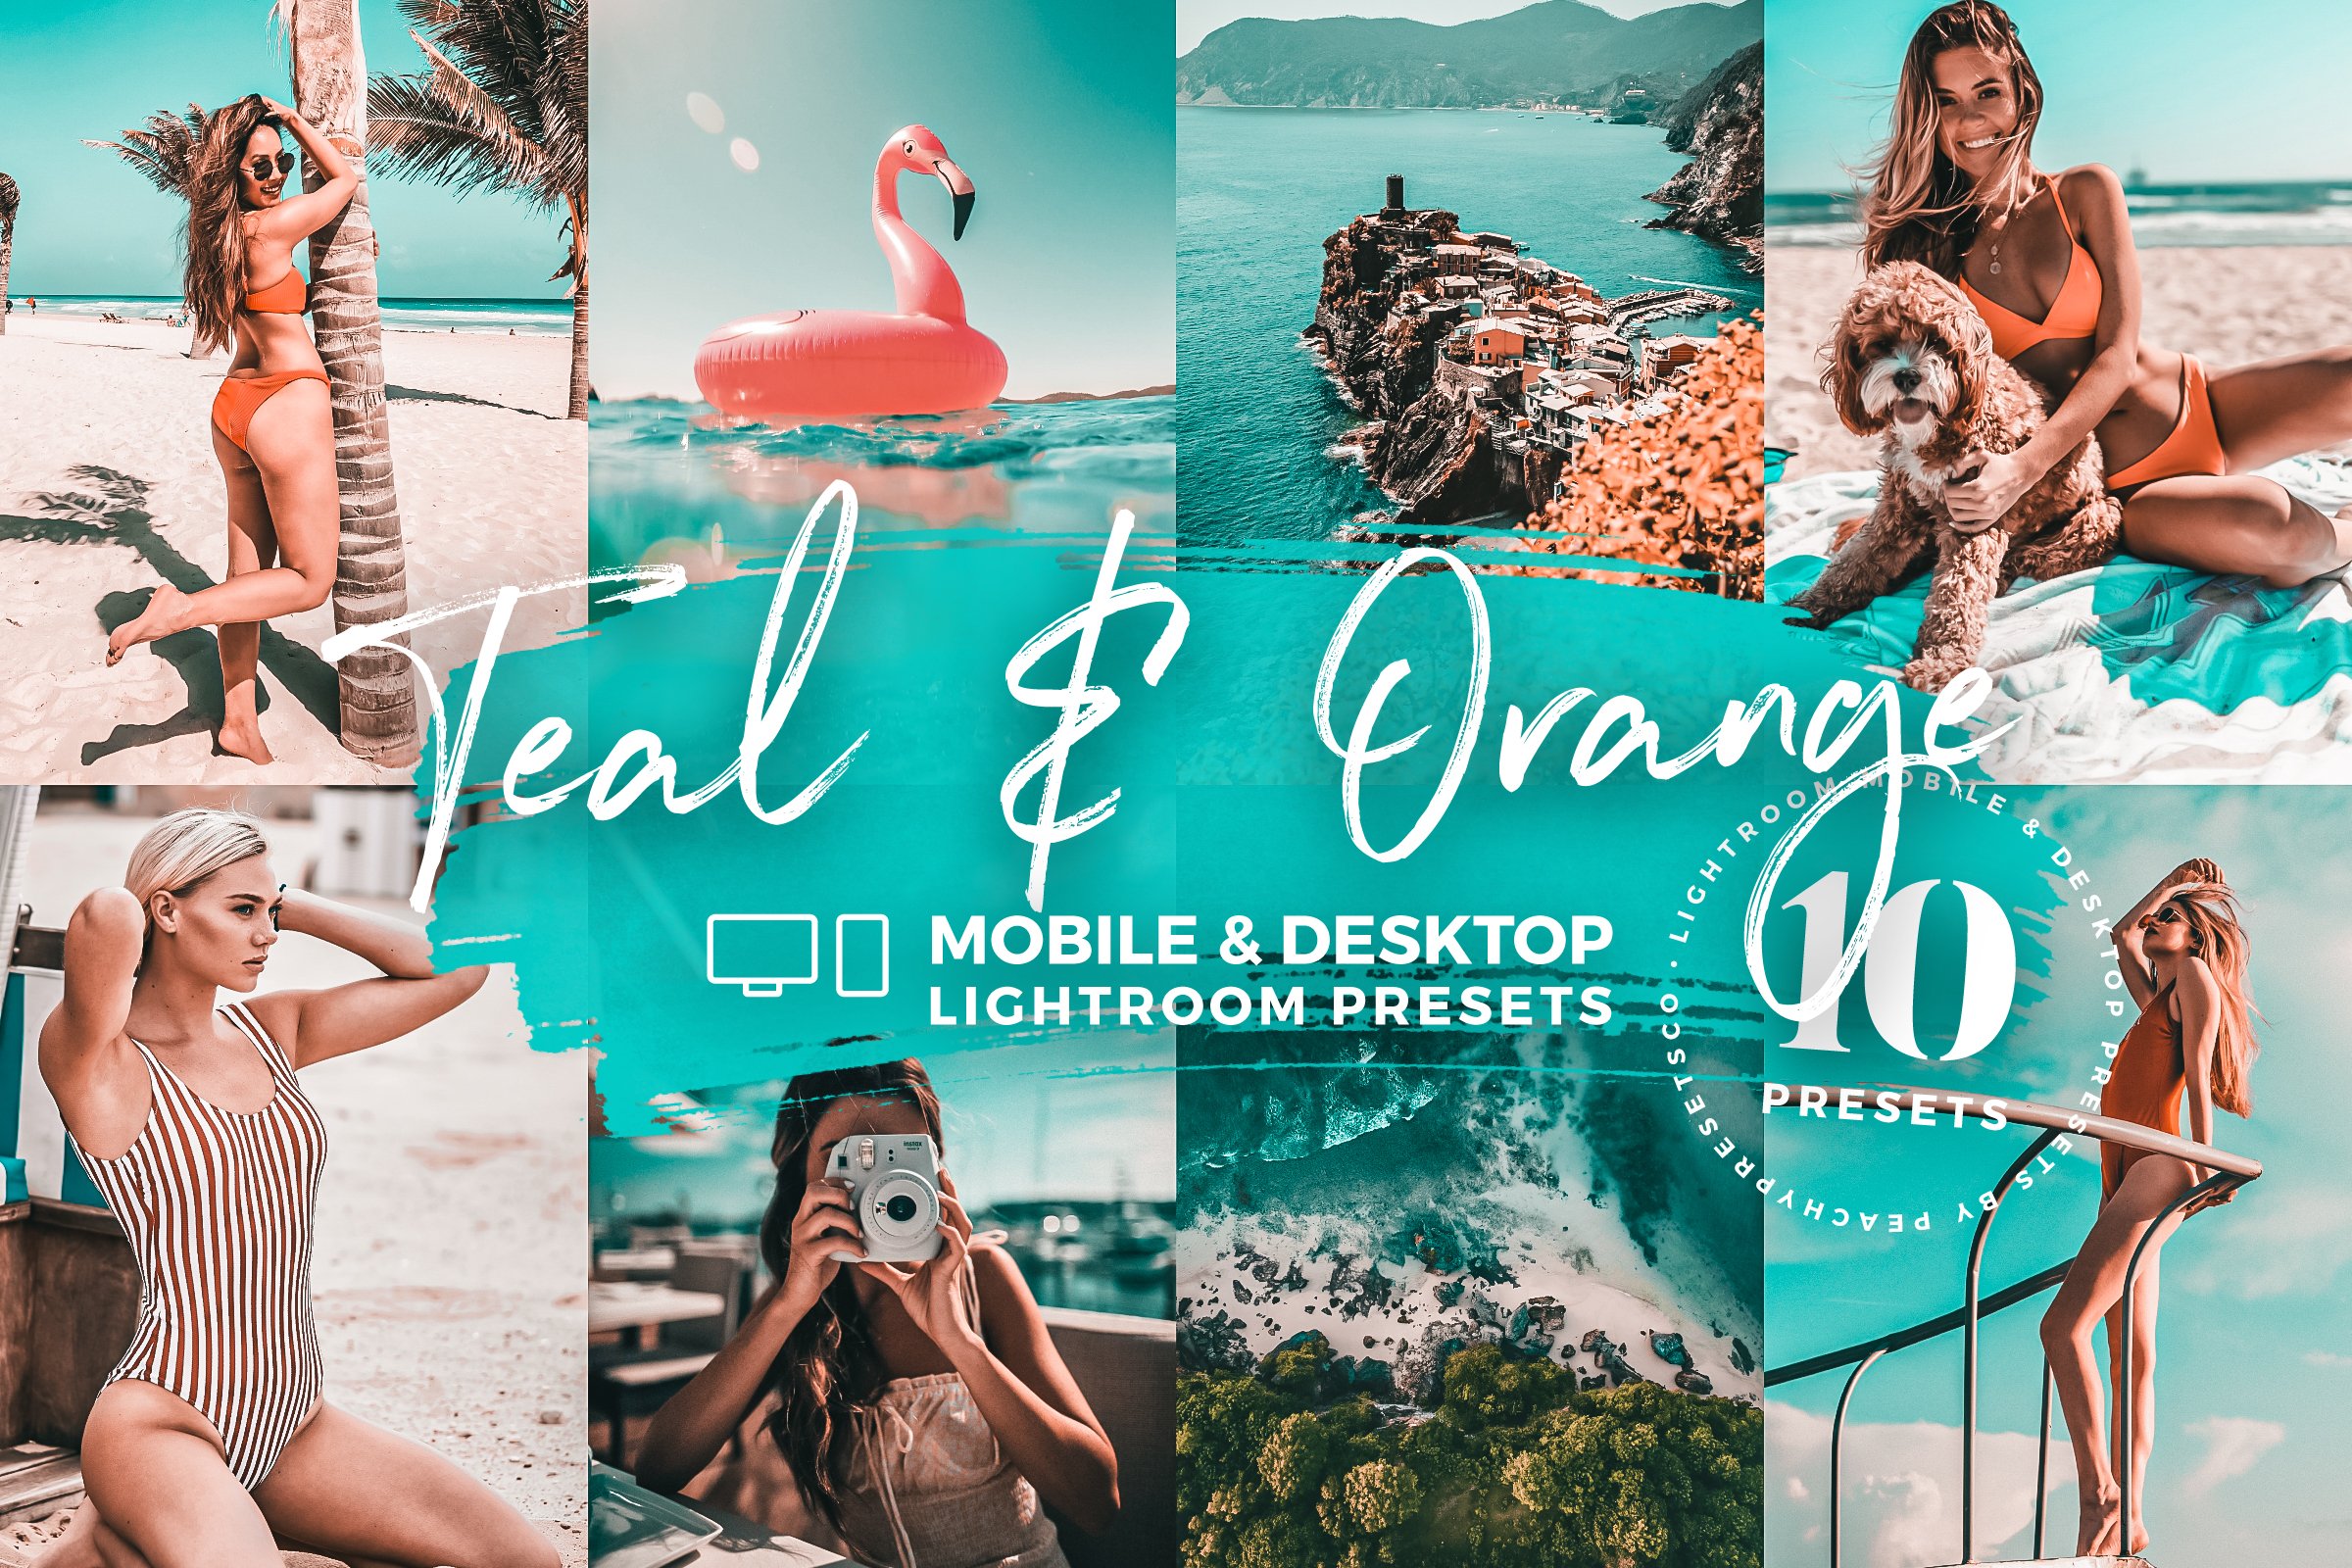 10 Teal & Orange Mobile Presetscover image.